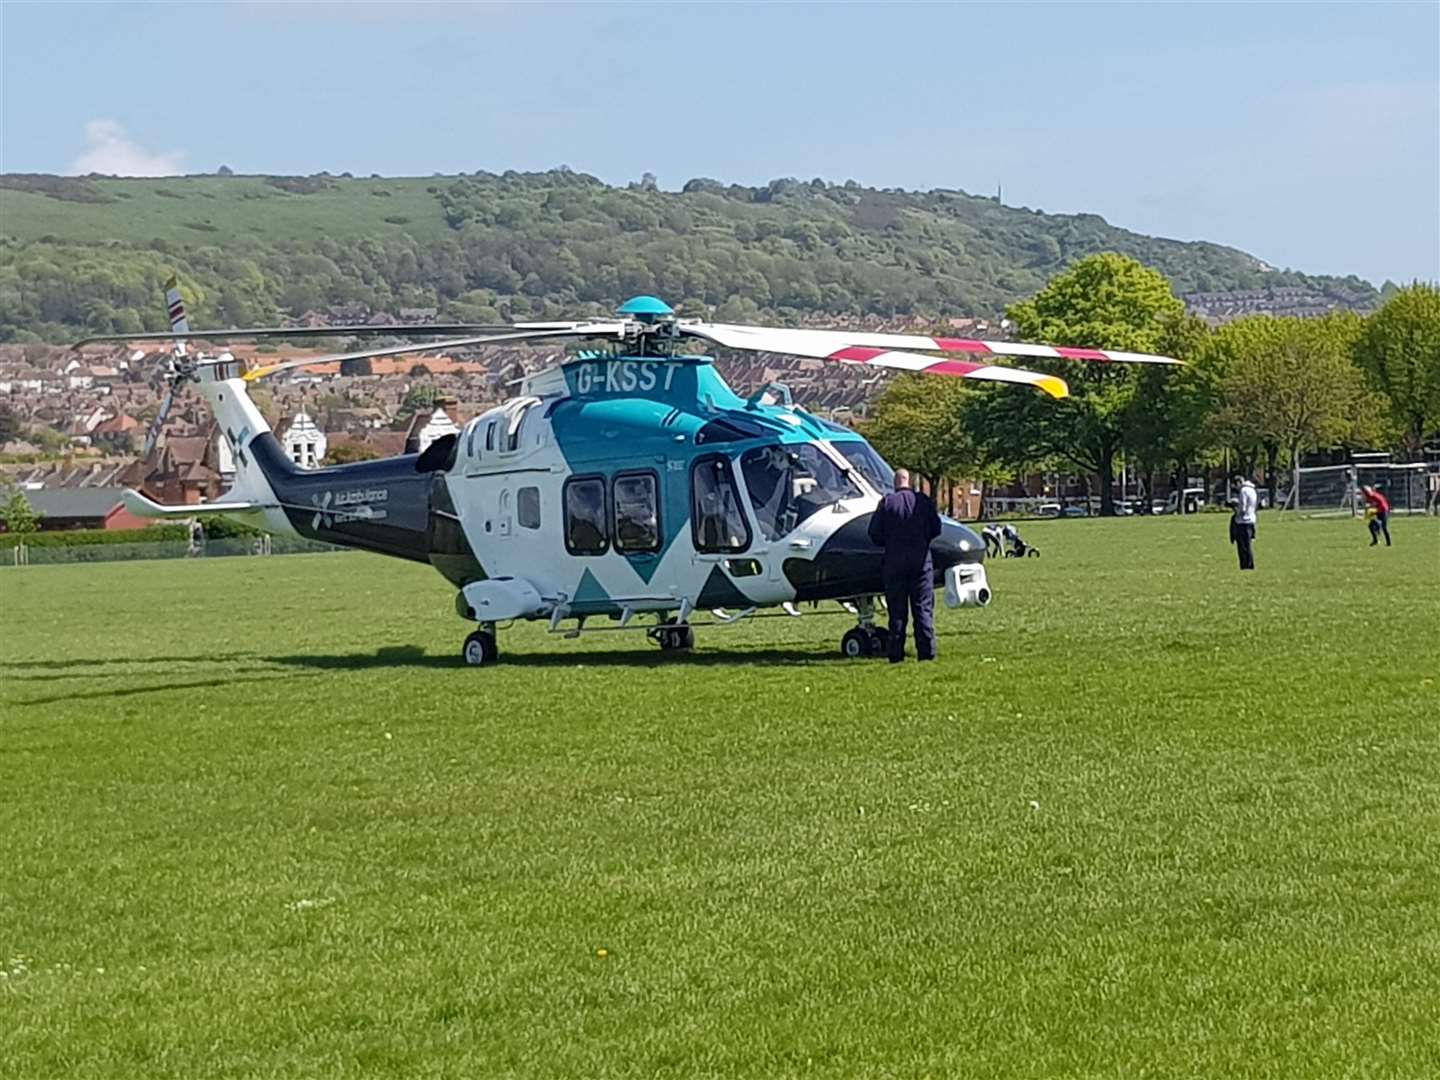 The air ambulance at Radnor Park. Photo: Clive Mardon